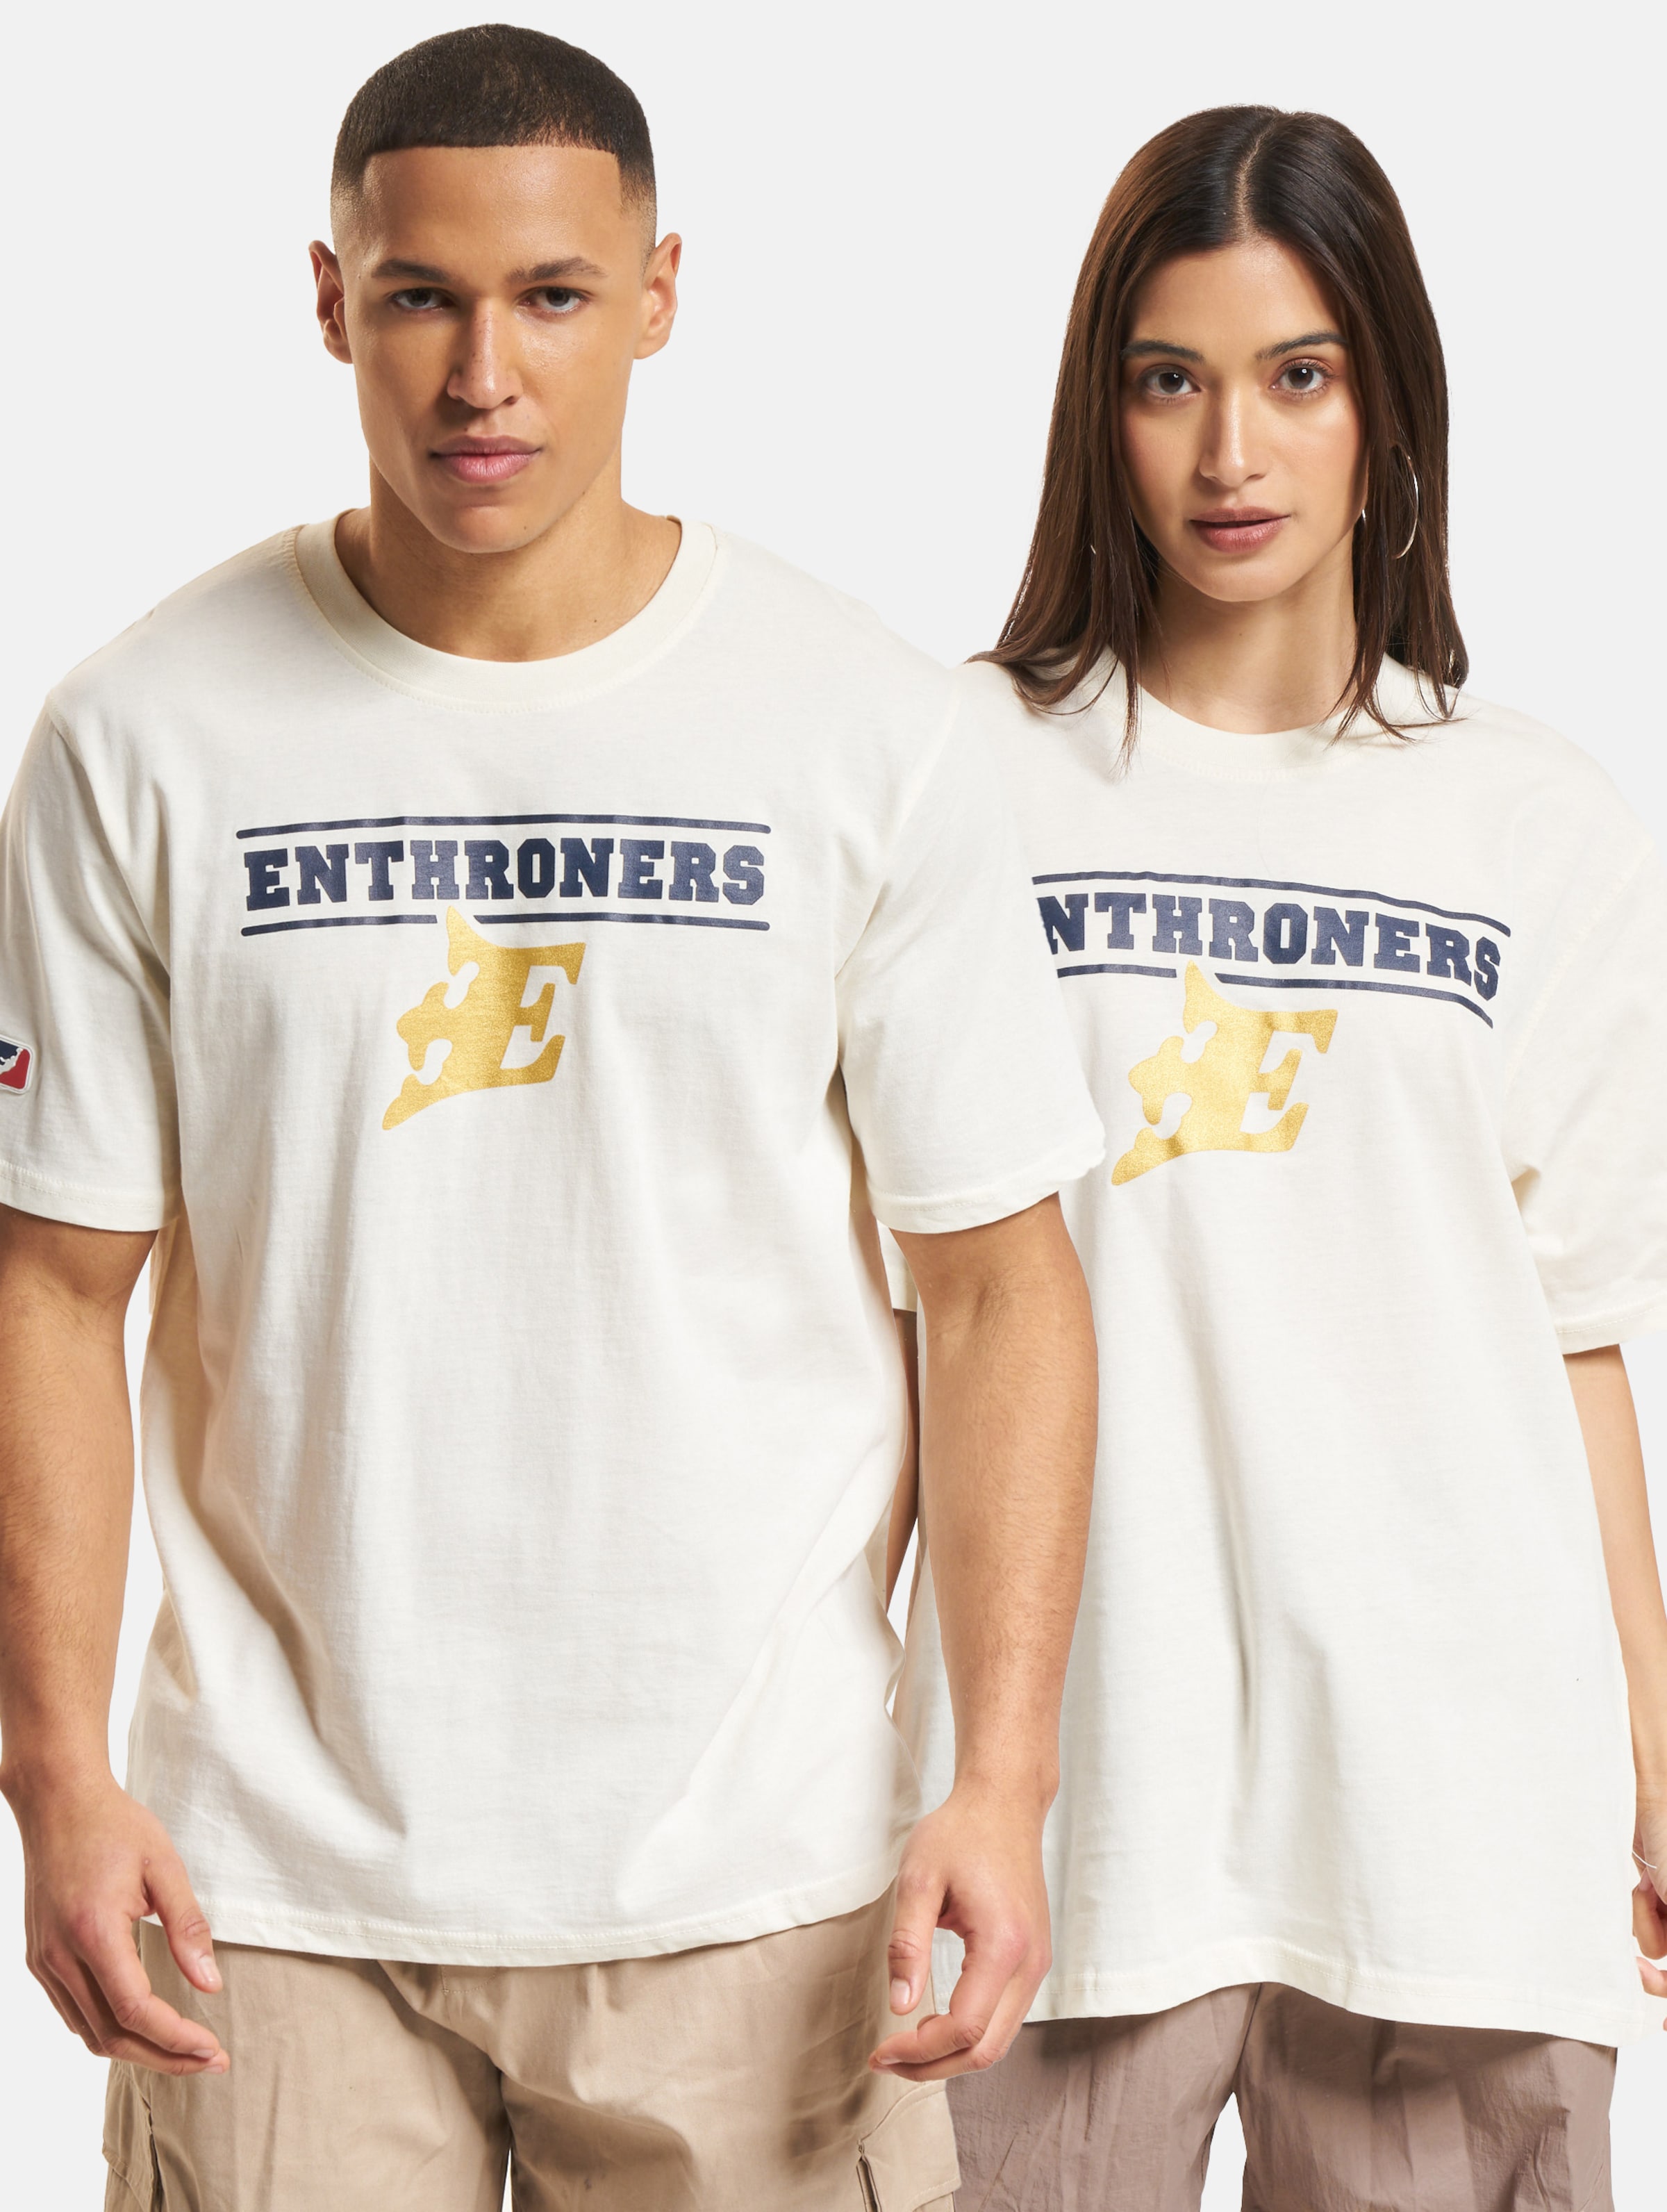 European League Of Football ELF Fehérvár Enthroners 2 T-Shirt Unisex op kleur beige, Maat XS